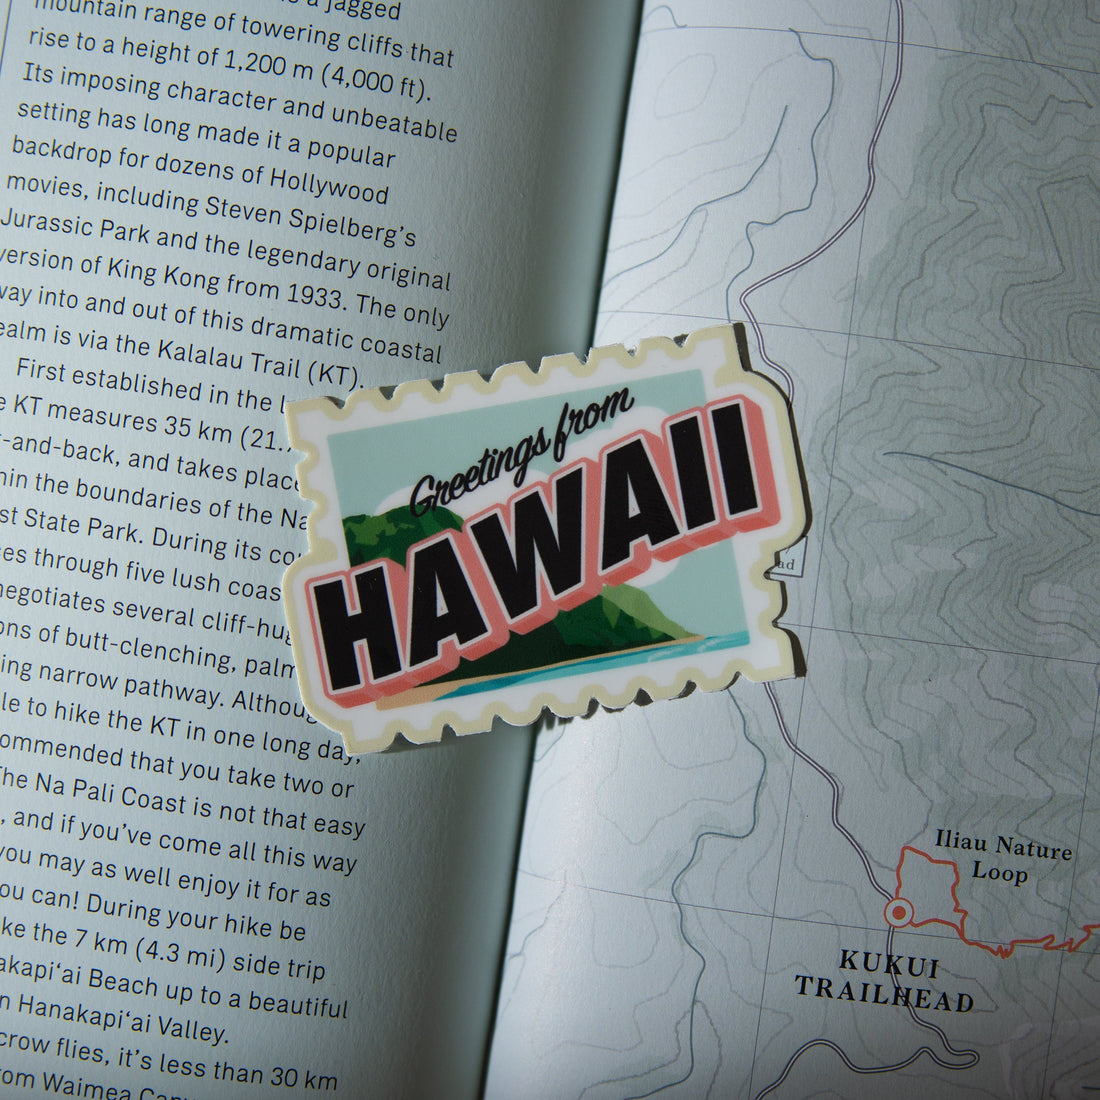 Hawaii State Sticker Pack - dermovitalia